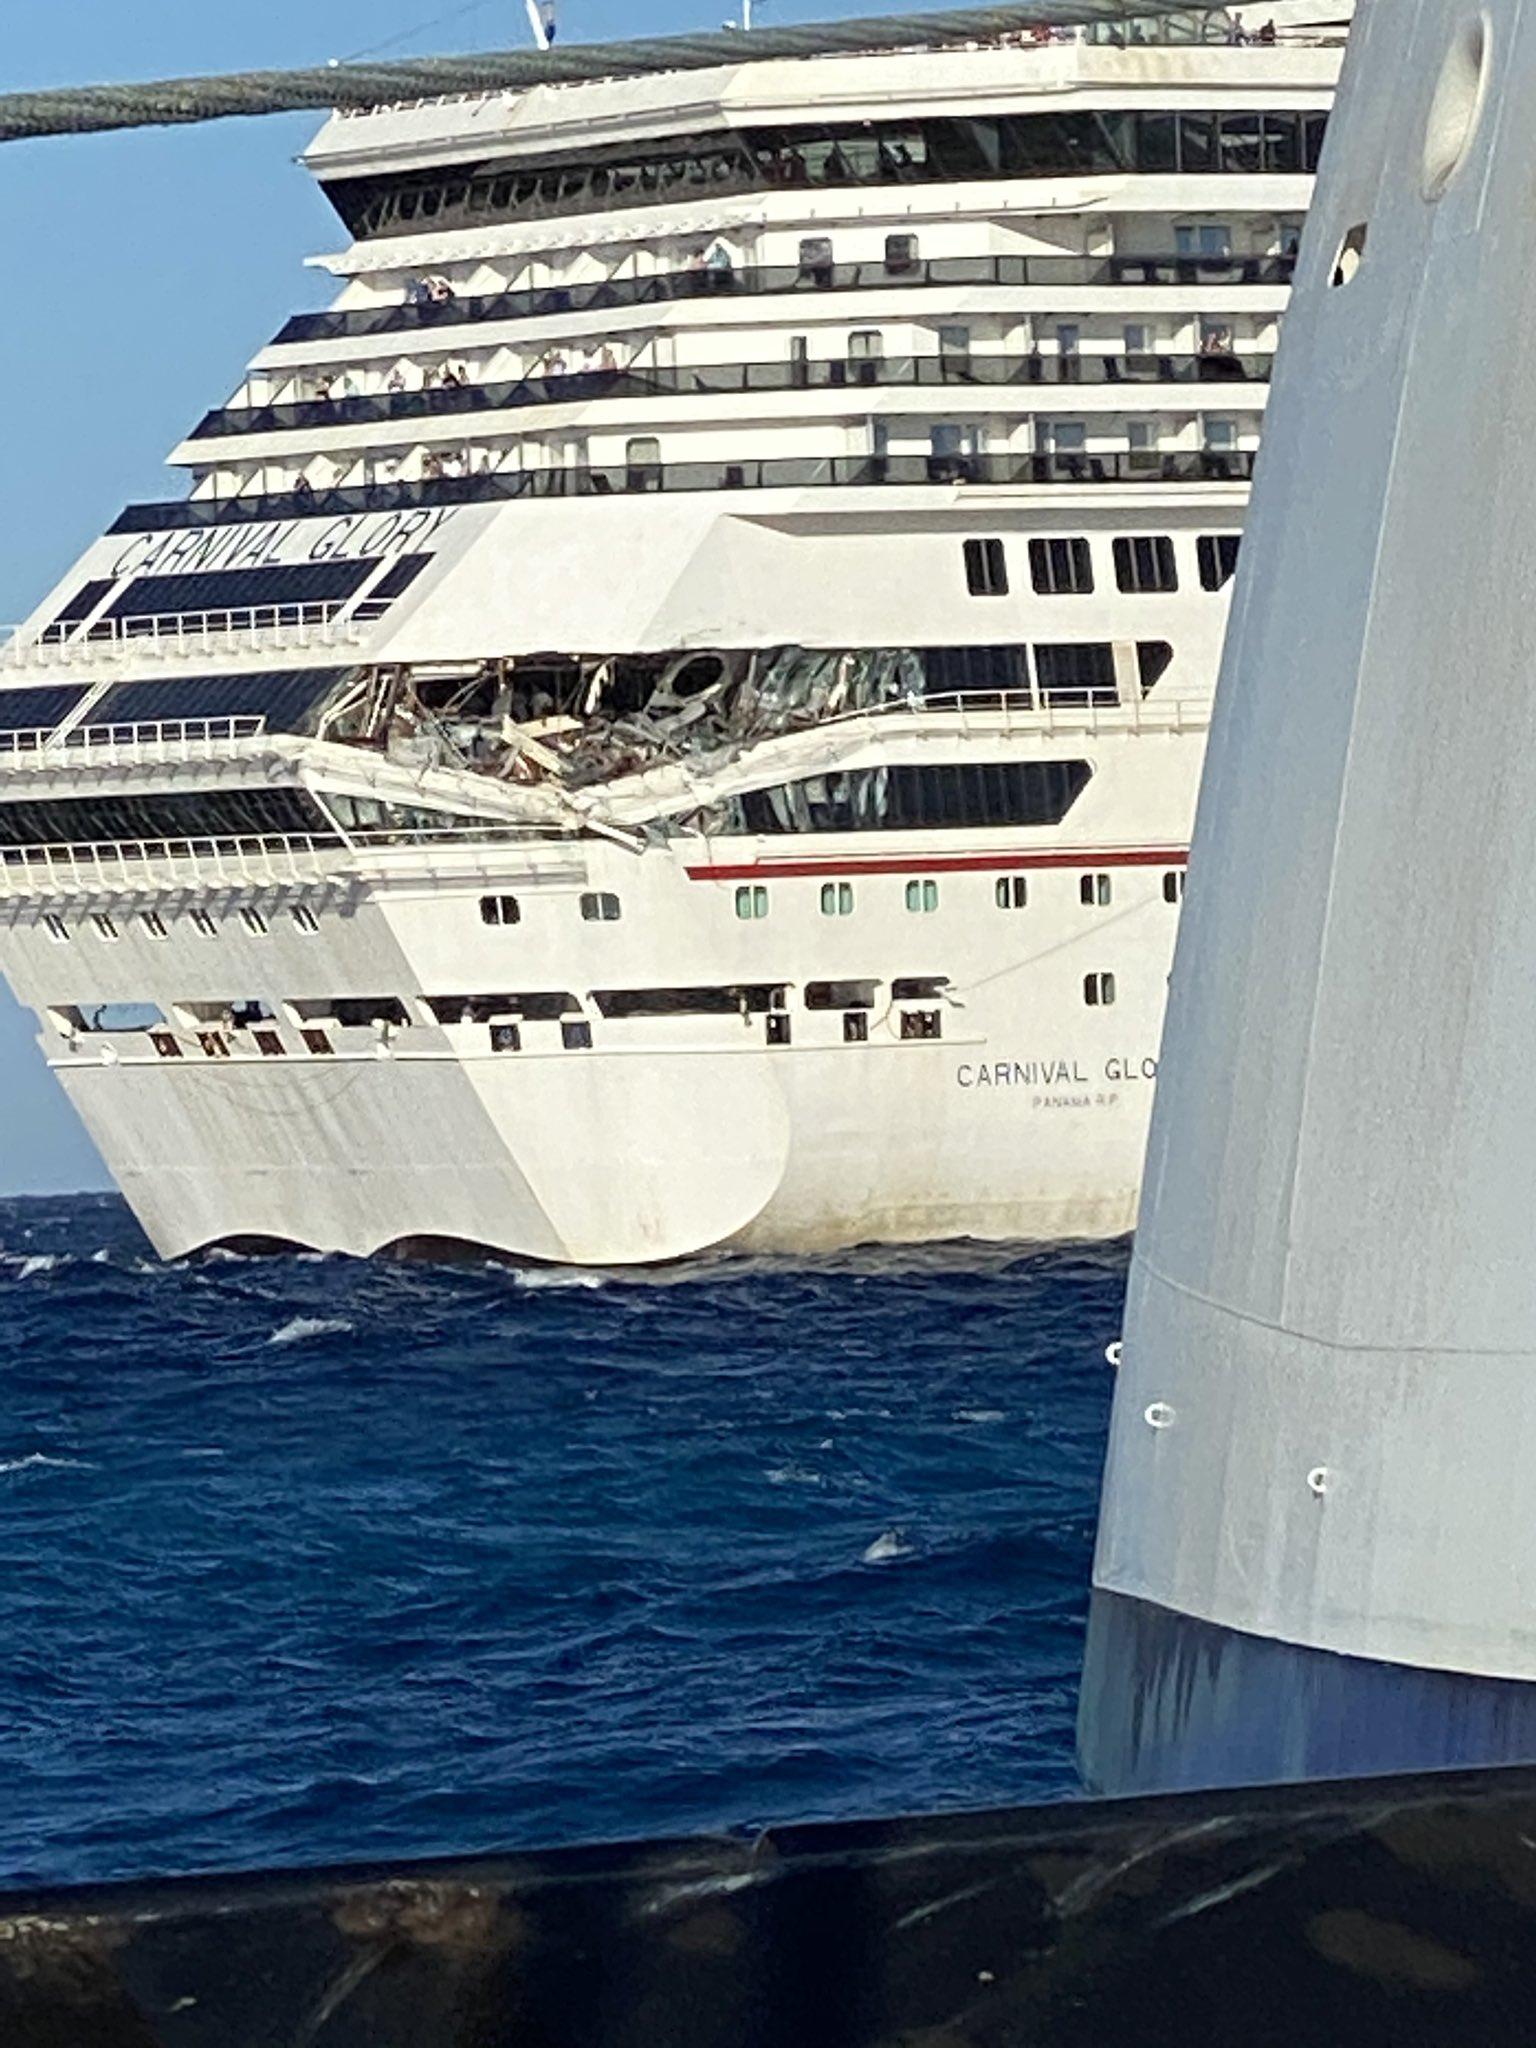 carnival cruise ships collide cozumel 2019